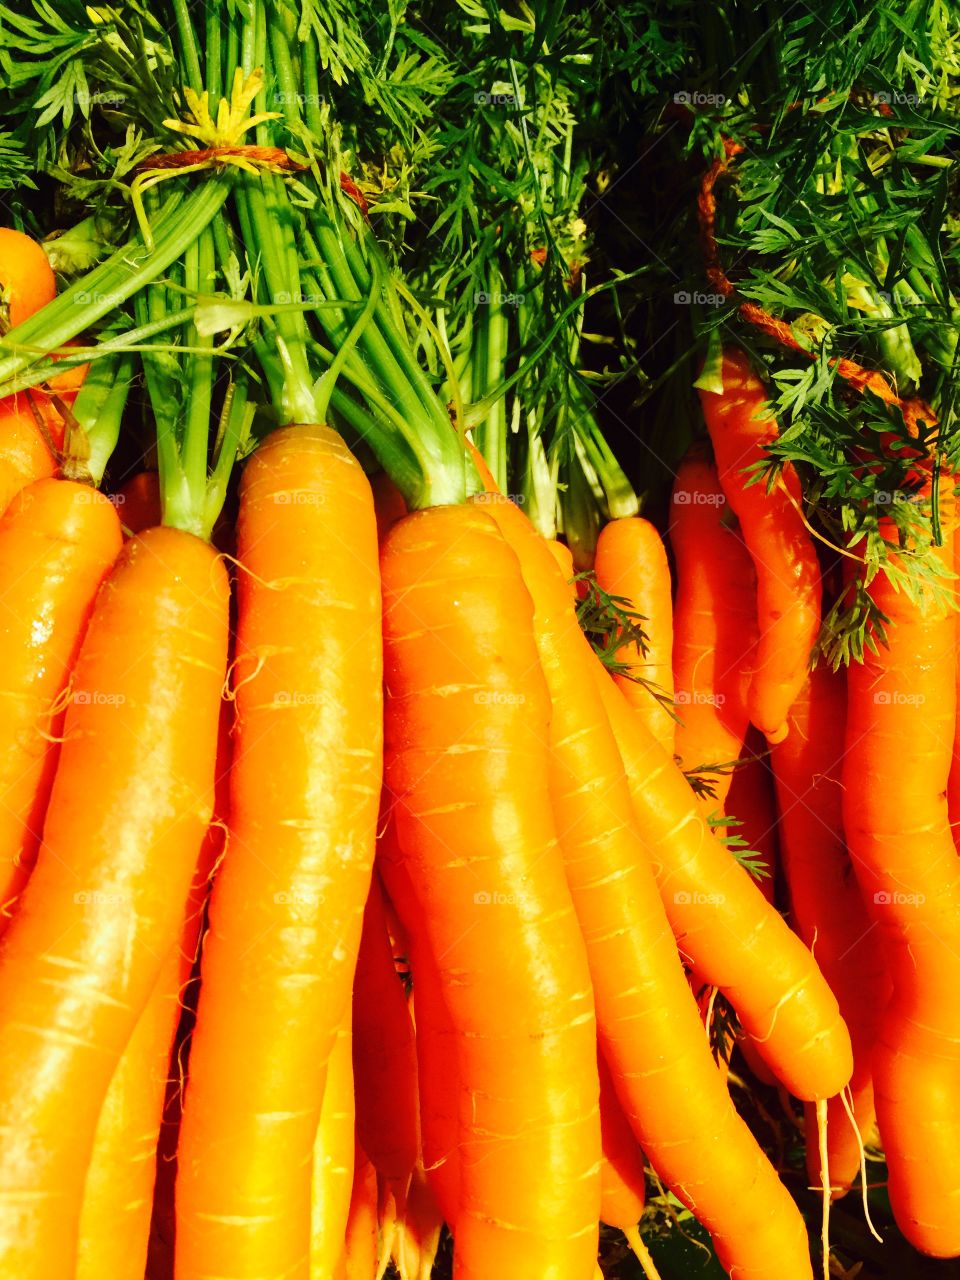 Orange color story / bundle of carrots